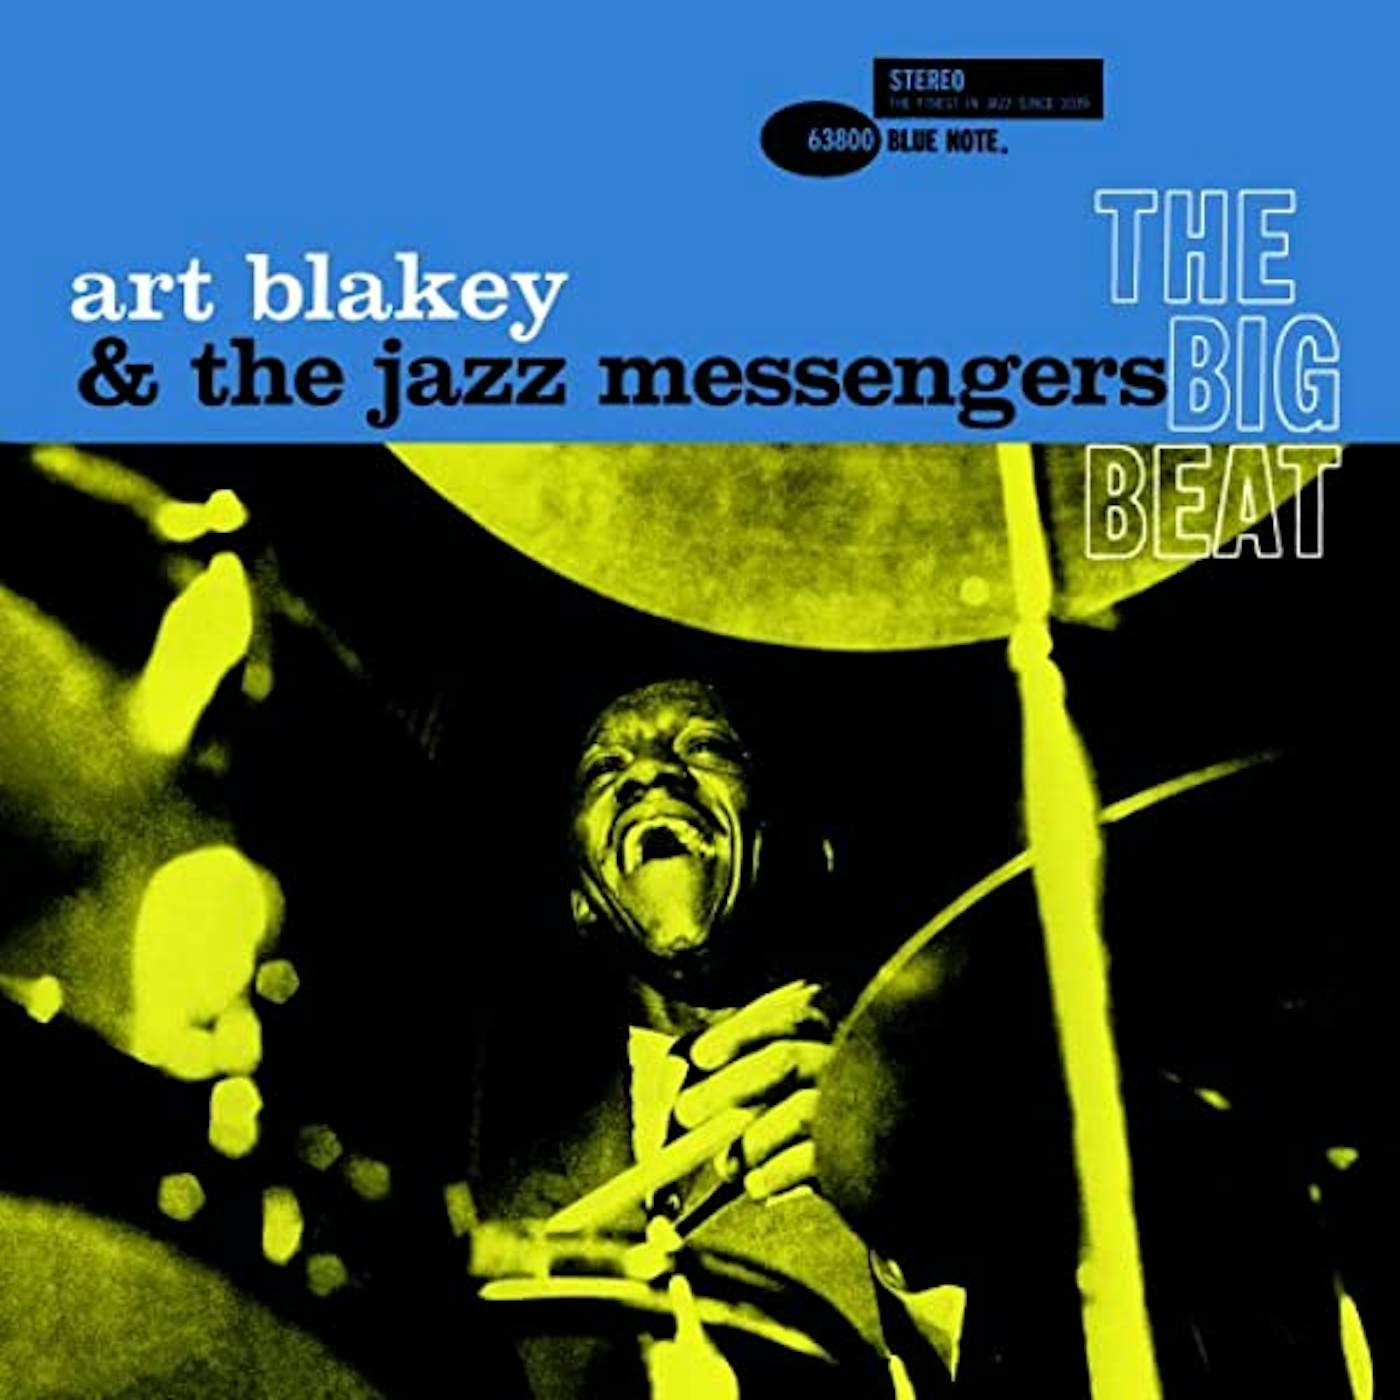 Art Blakey & The Jazz Messengers BIG BEAT Vinyl Record